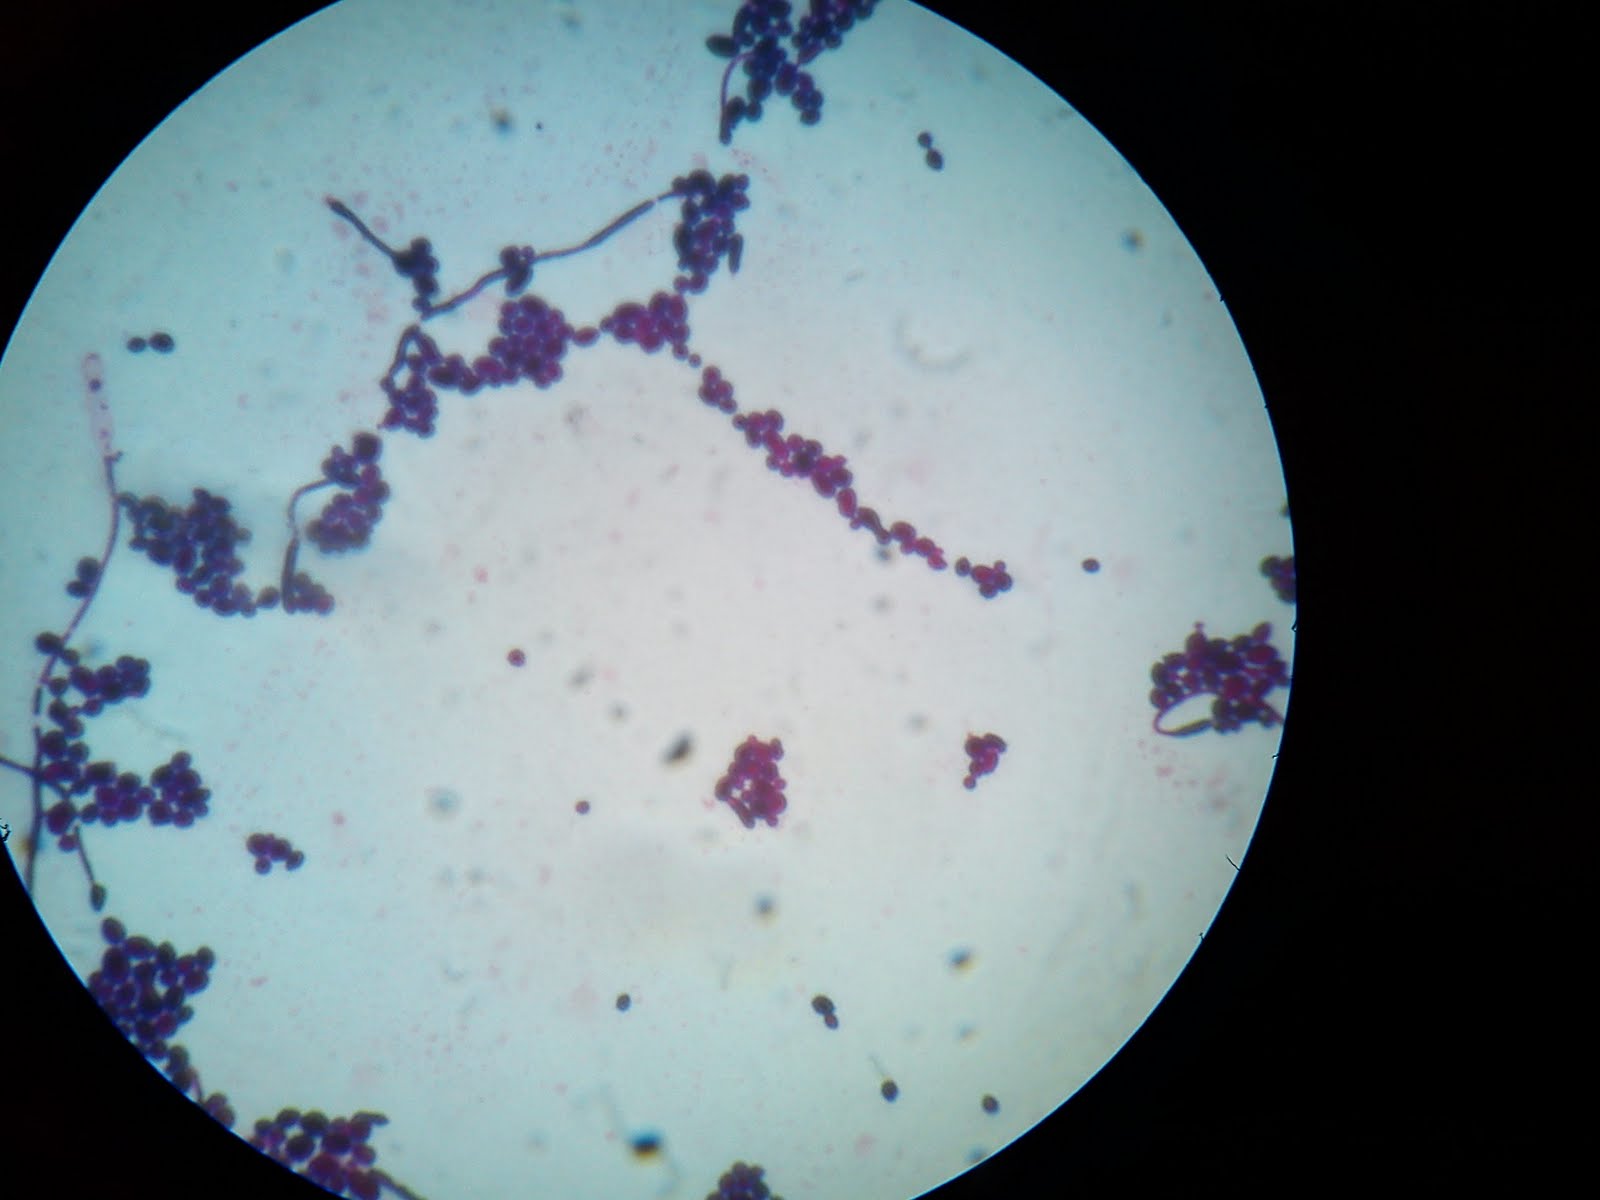 Молочница гриб. Кандида альбиканс под микроскопом. Грибы кандида микроскопия. Грибы кандида альбиканс микроскопия. Грибок рода кандида под микроскопом.